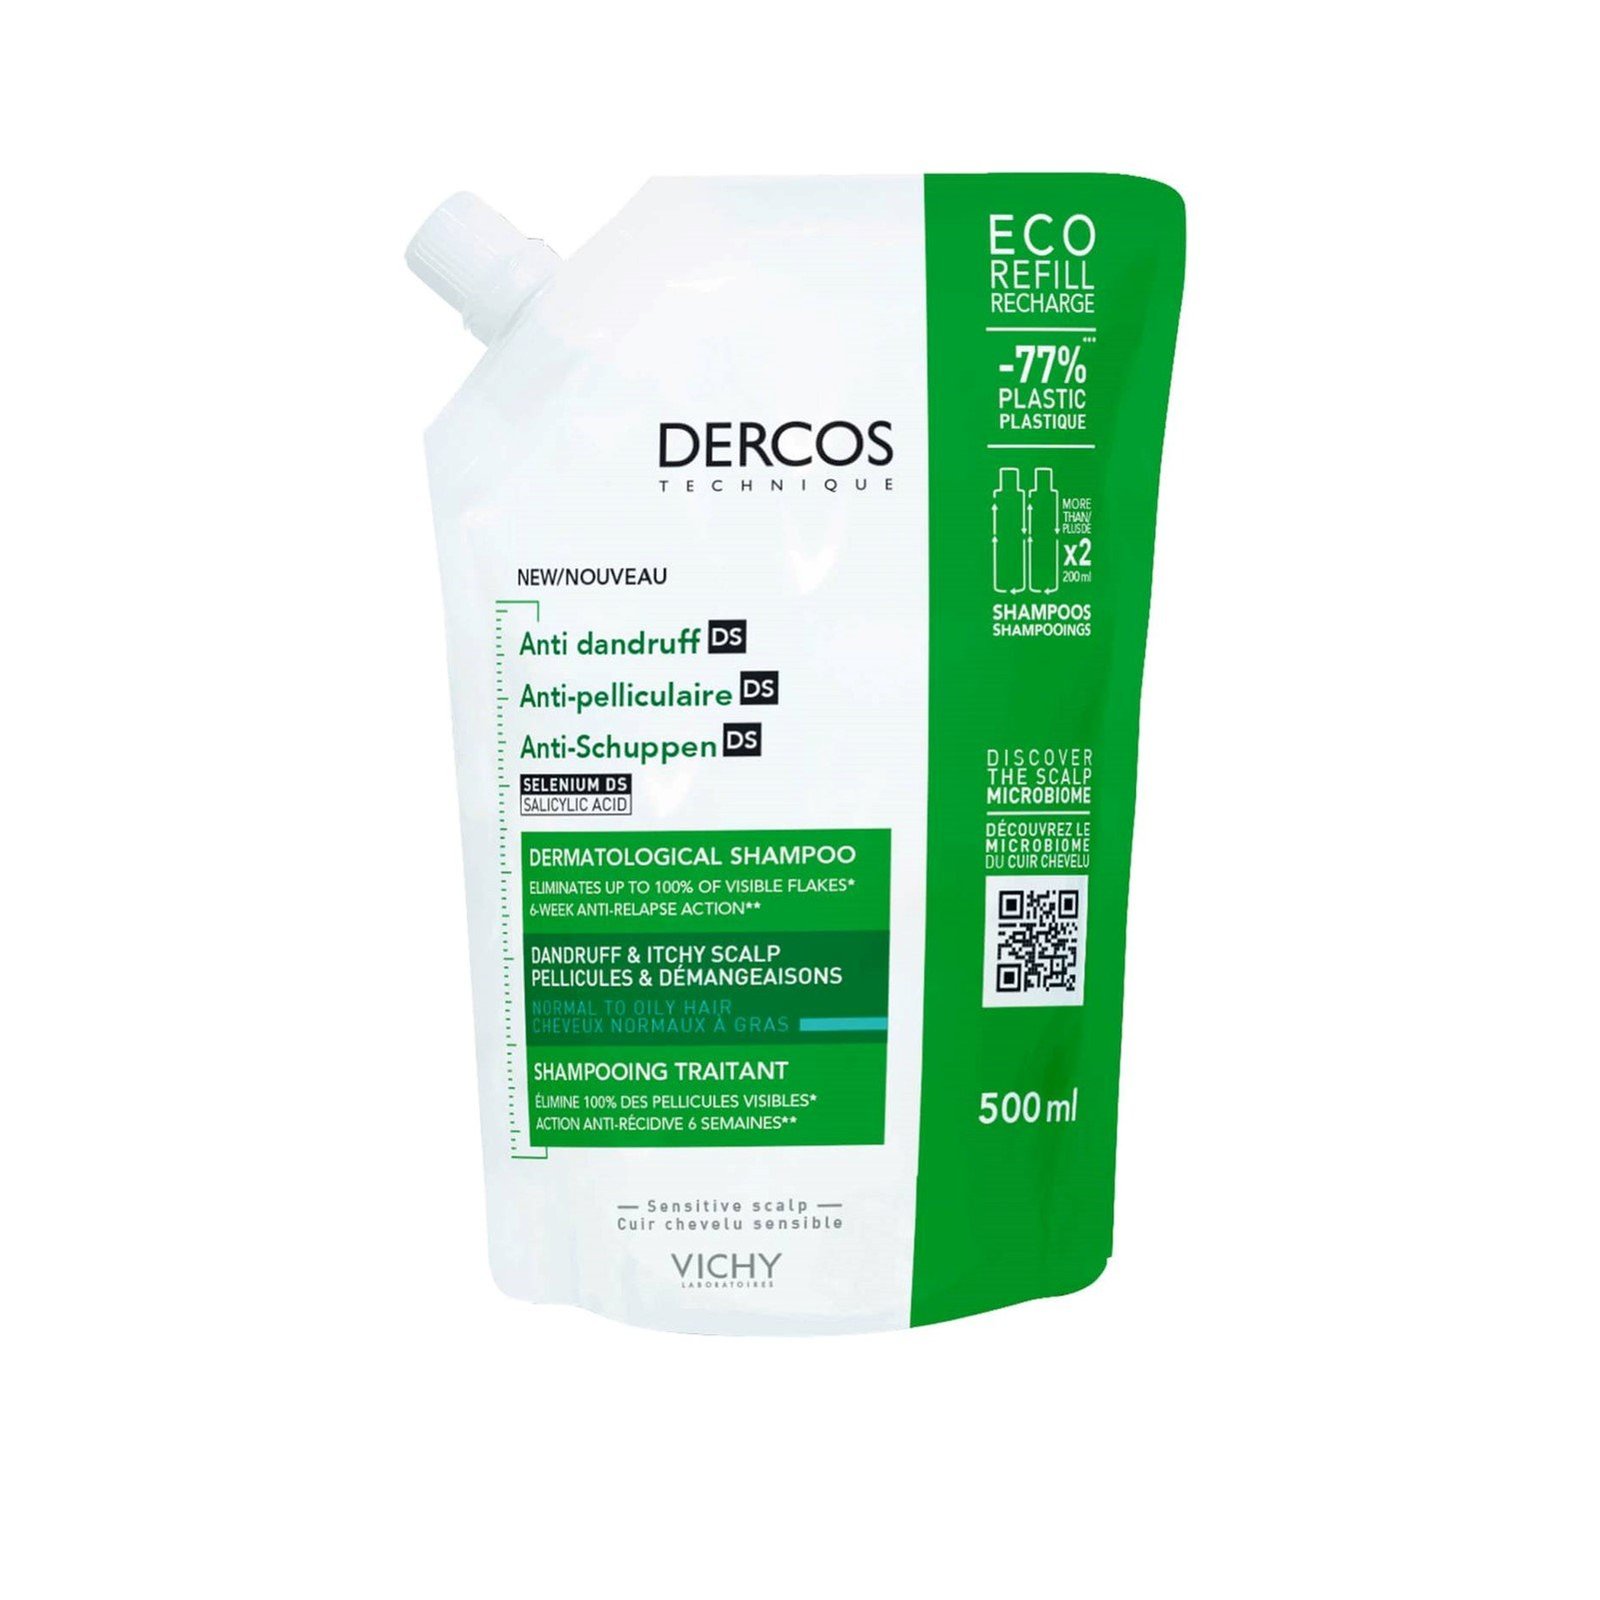 Vichy Dercos Anti-Dandruff DS Shampoo for Normal to Oily Hair Eco Refill 500ml (16.9 fl oz)